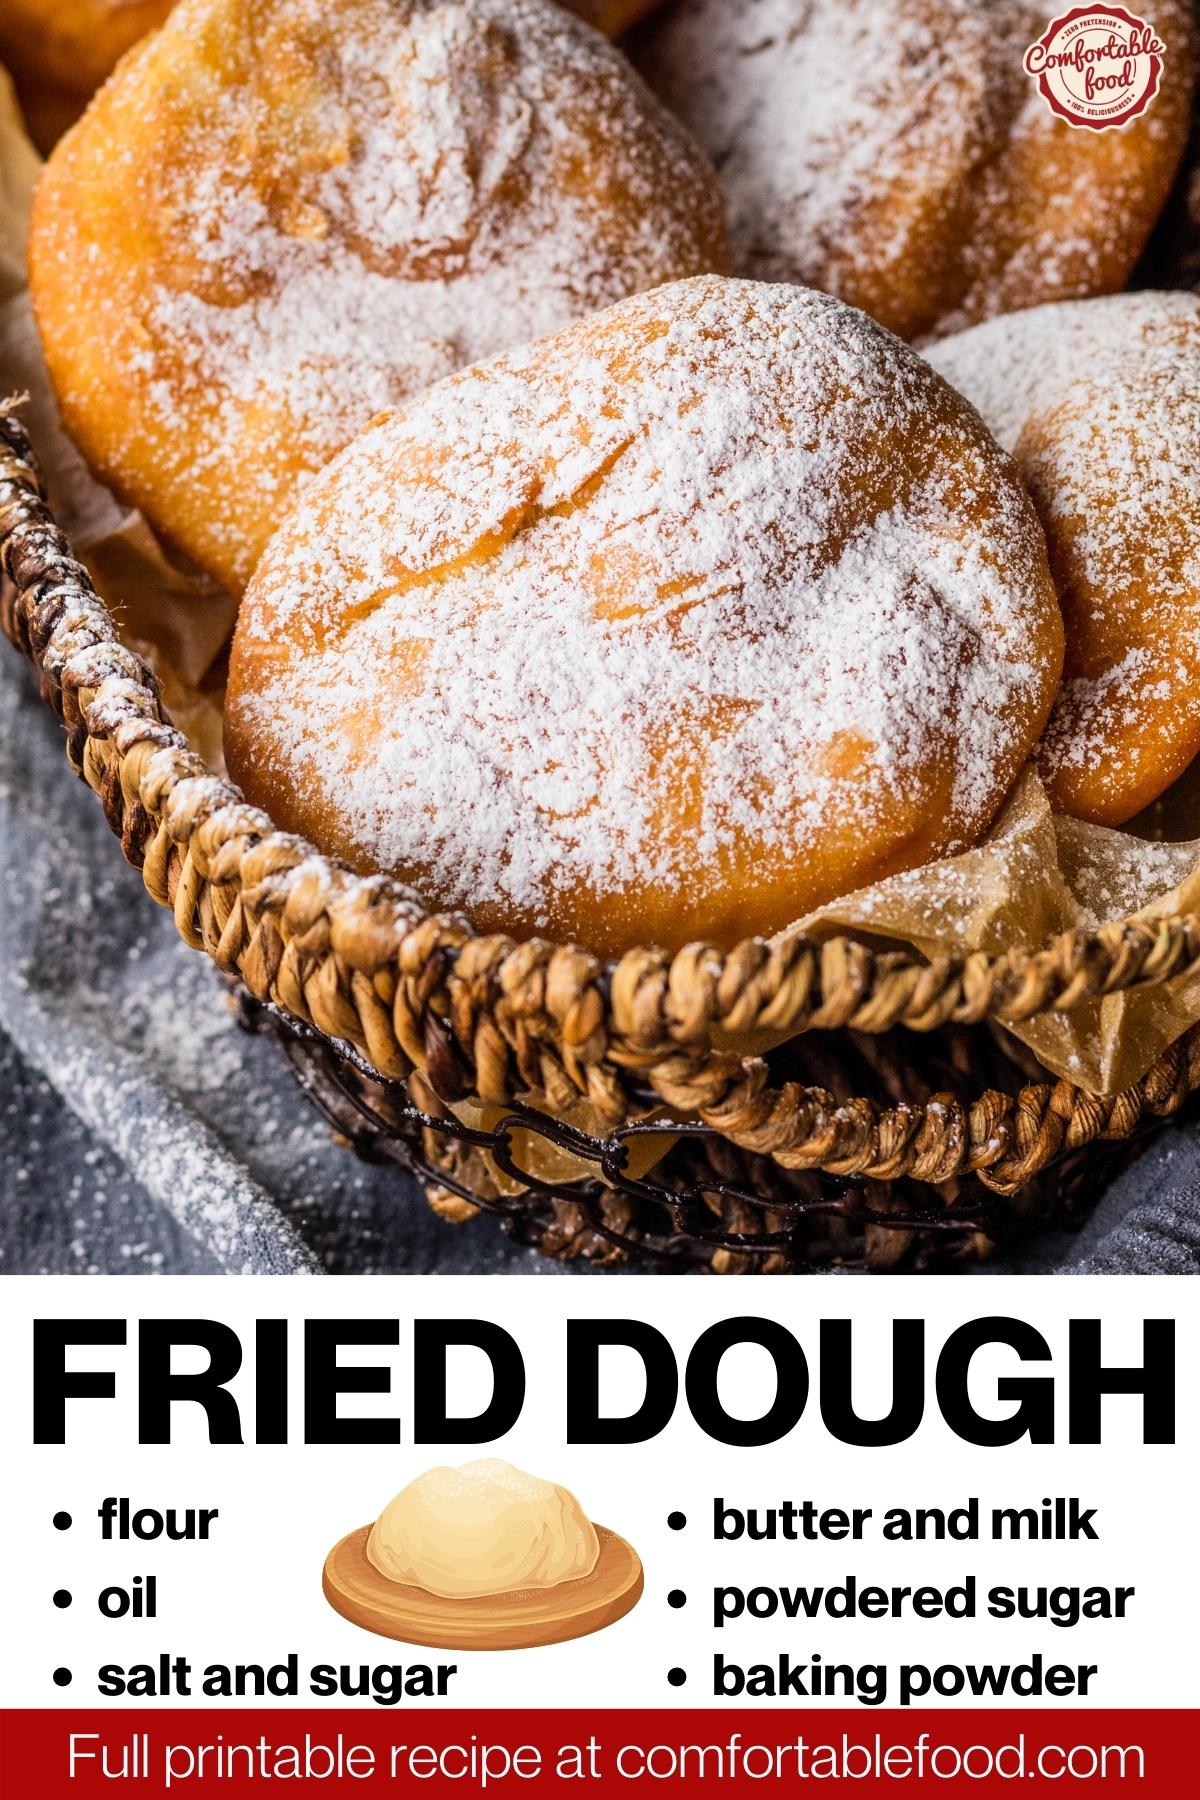 Fried dough socials